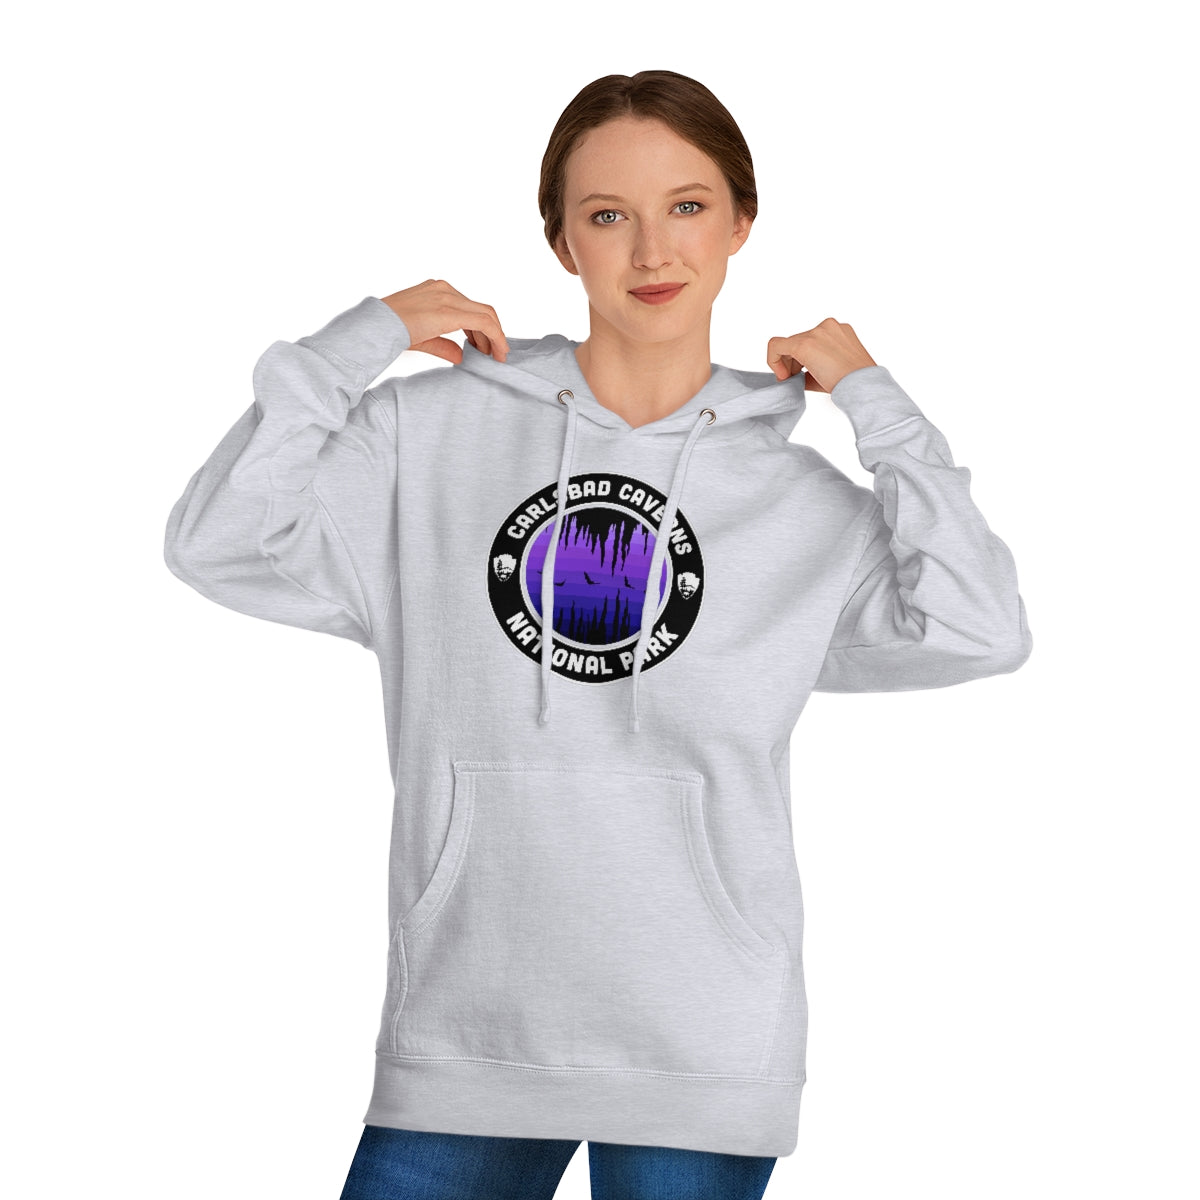 Carlsbad Caverns National Park Hoodie - Purple Round Emblem Design